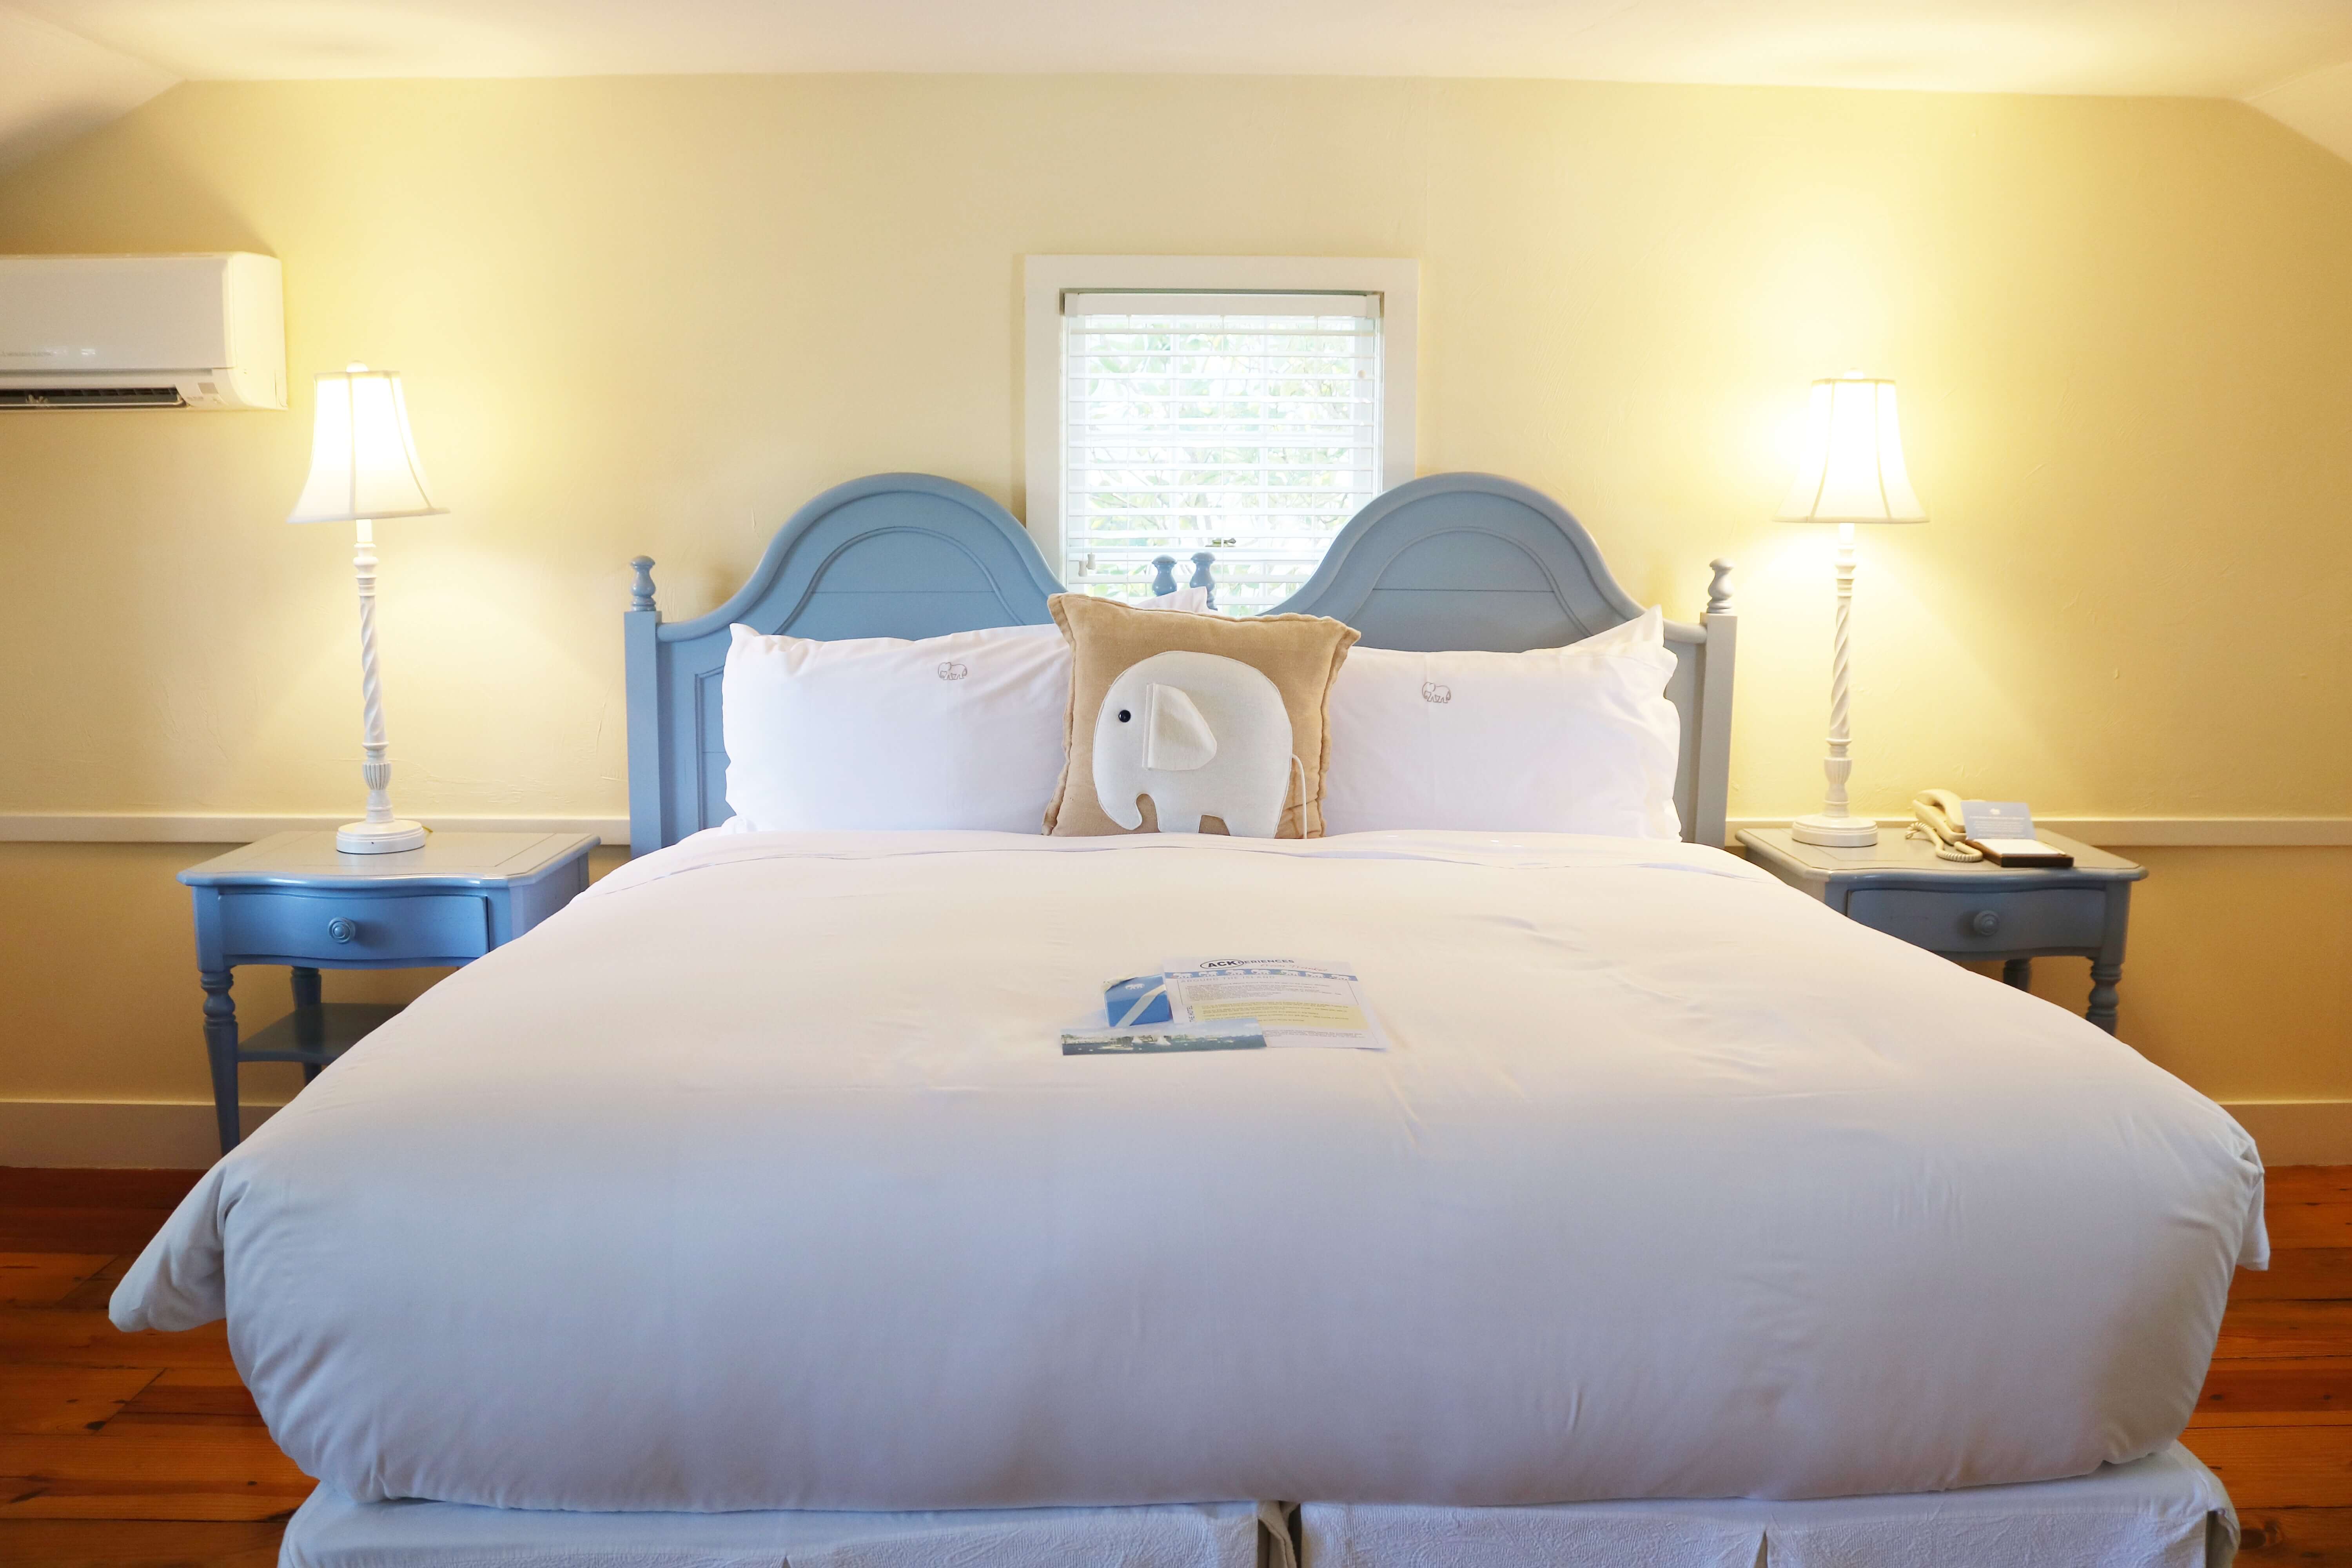 White Elephant Hotel Nantucket Review sparkleshinylove